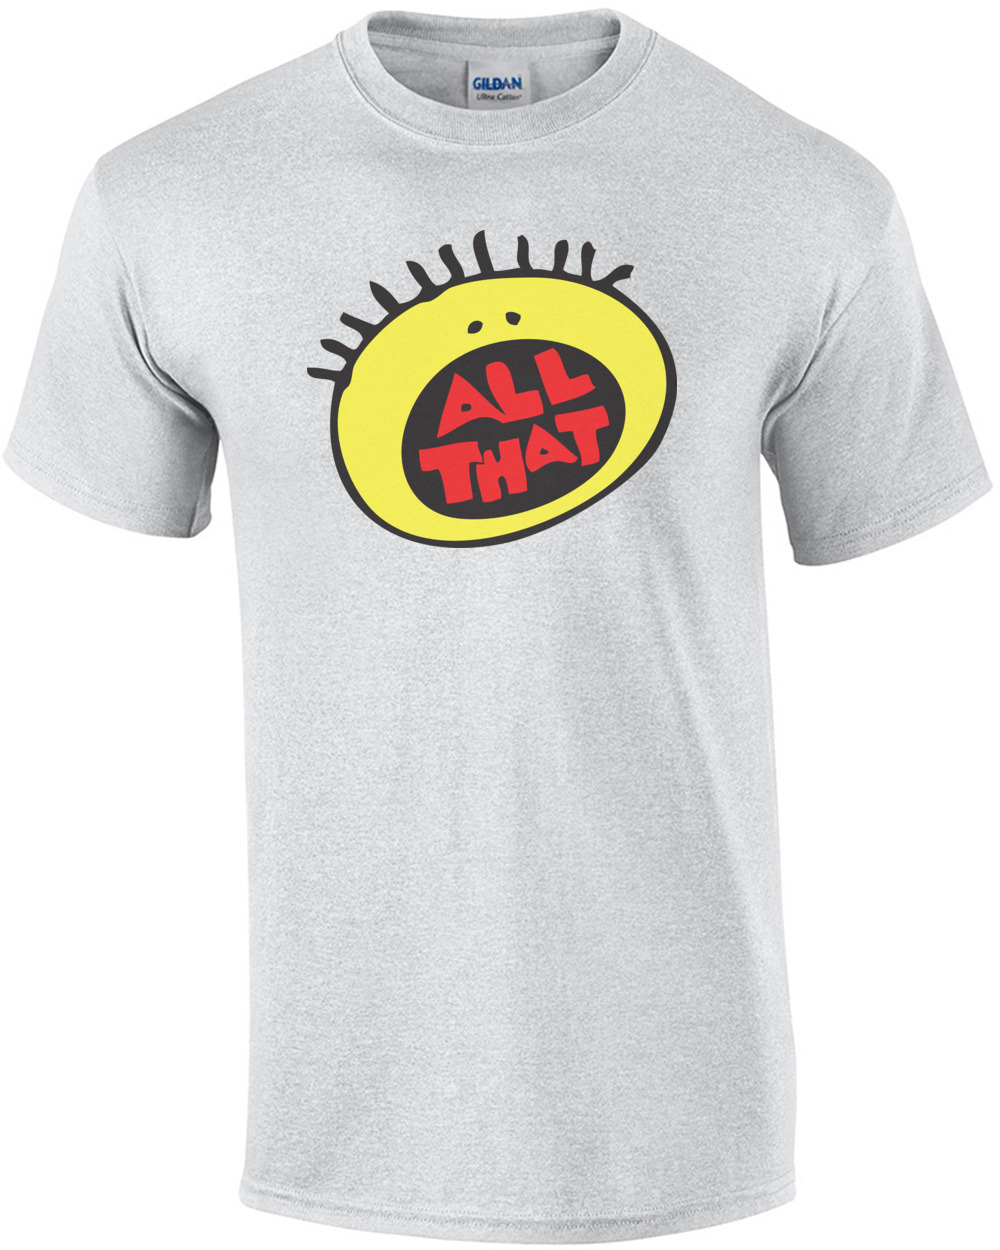 All That T-shirt | eBay